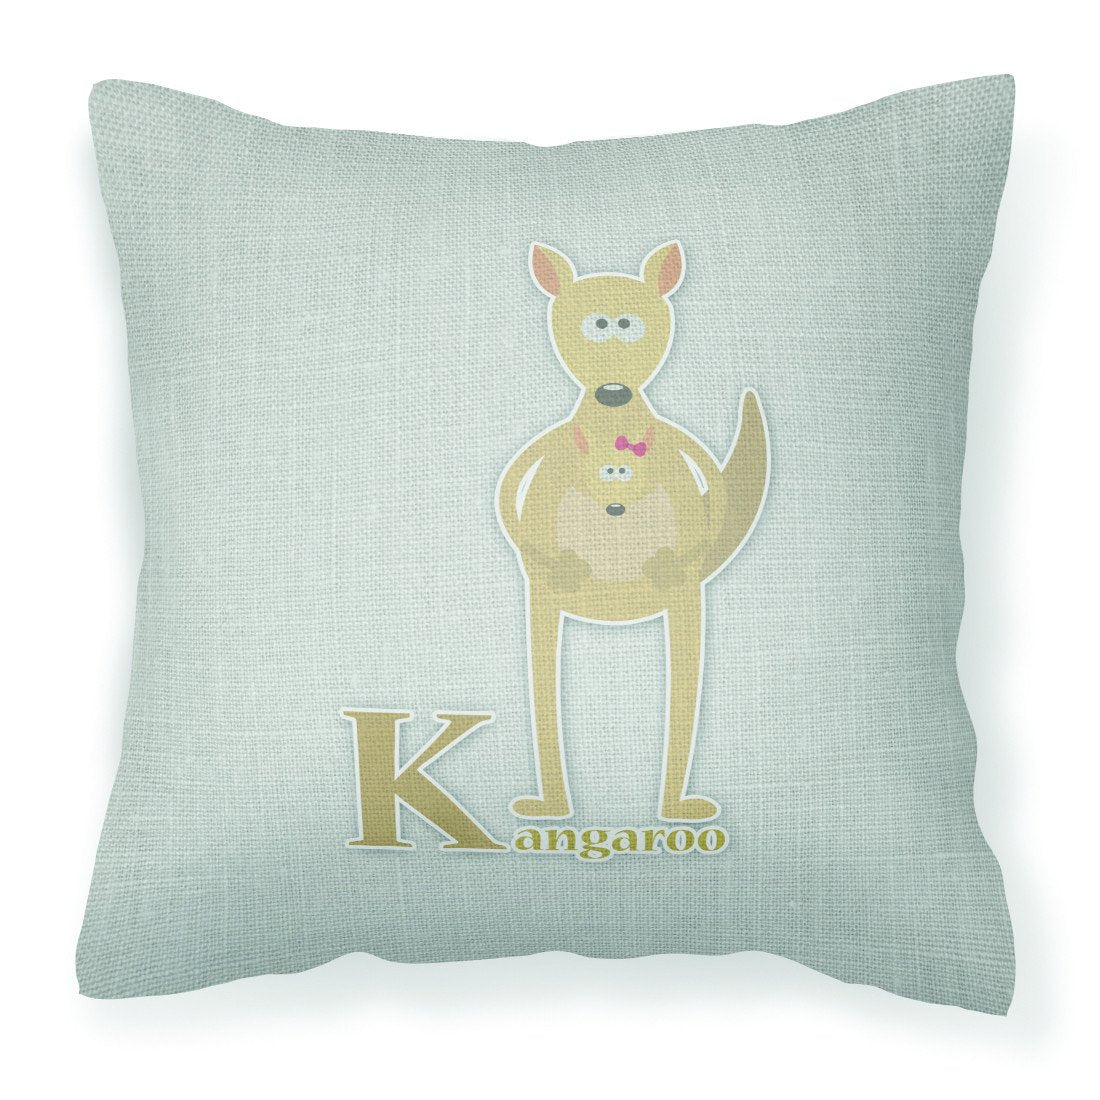 Alphabet K for Kangaroo Fabric Decorative Pillow BB5736PW1818 by Caroline's Treasures